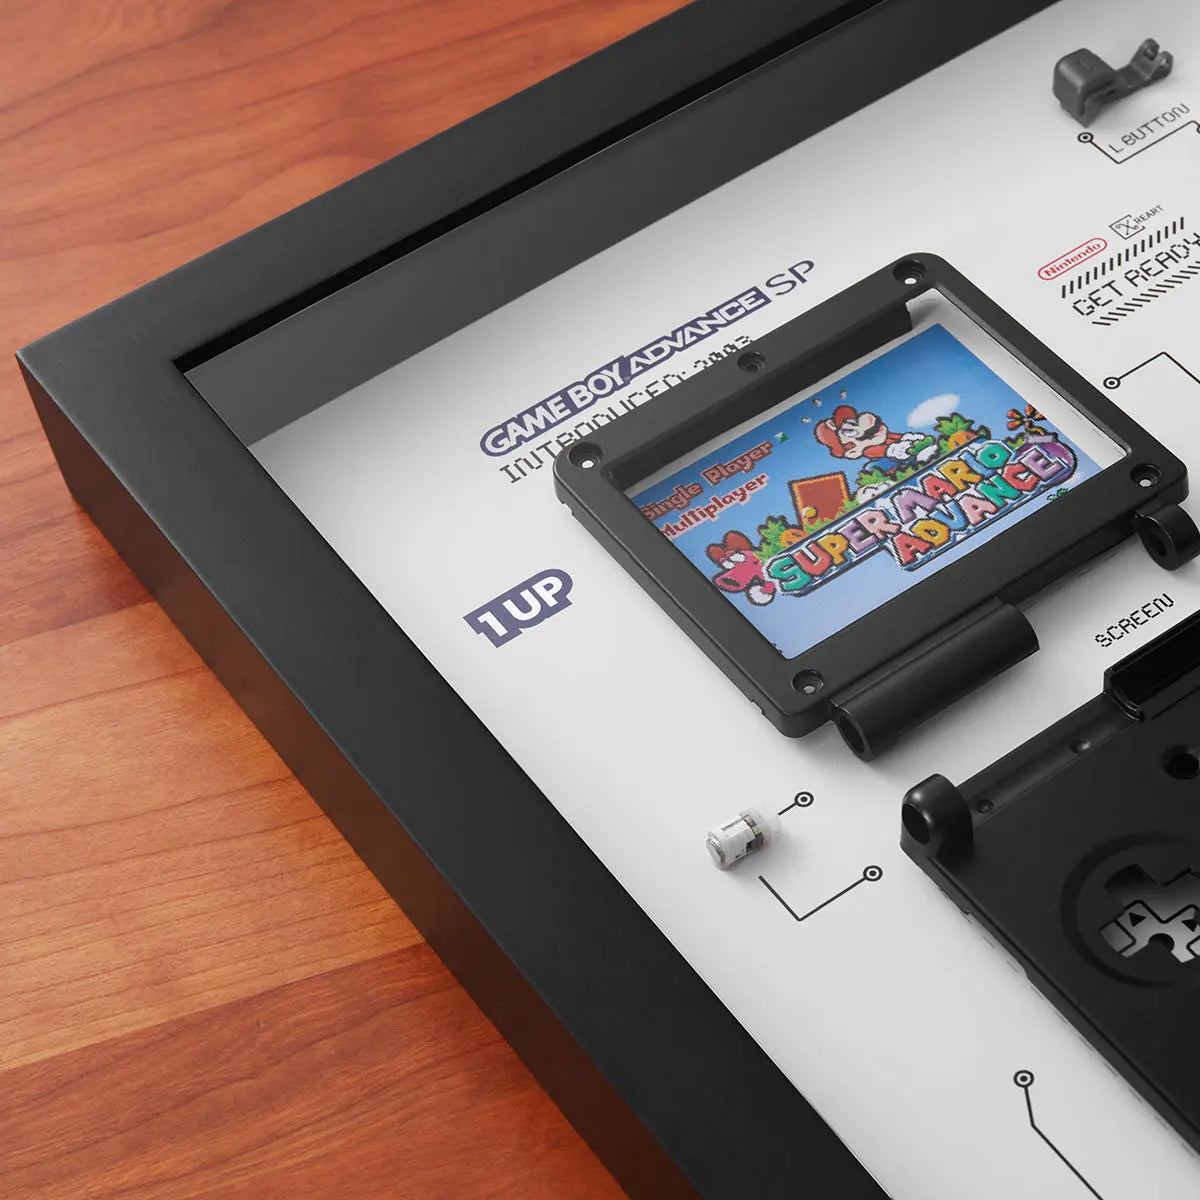 Gameboy Advance SP Printable Artwork Retro Video Game 